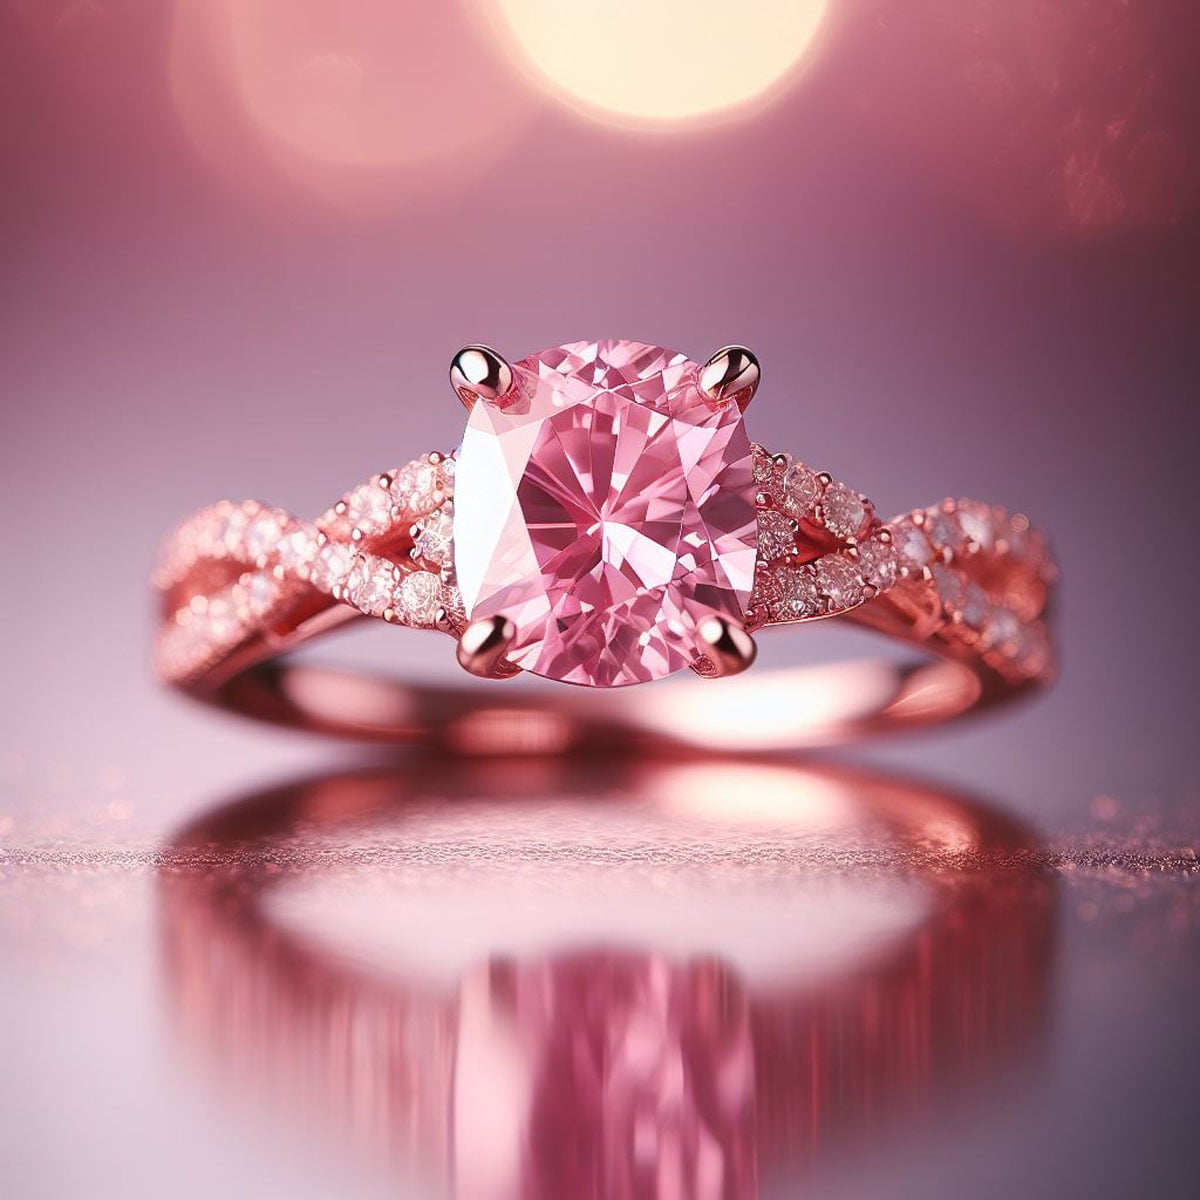 Exploring the Beauty of Pink Diamonds